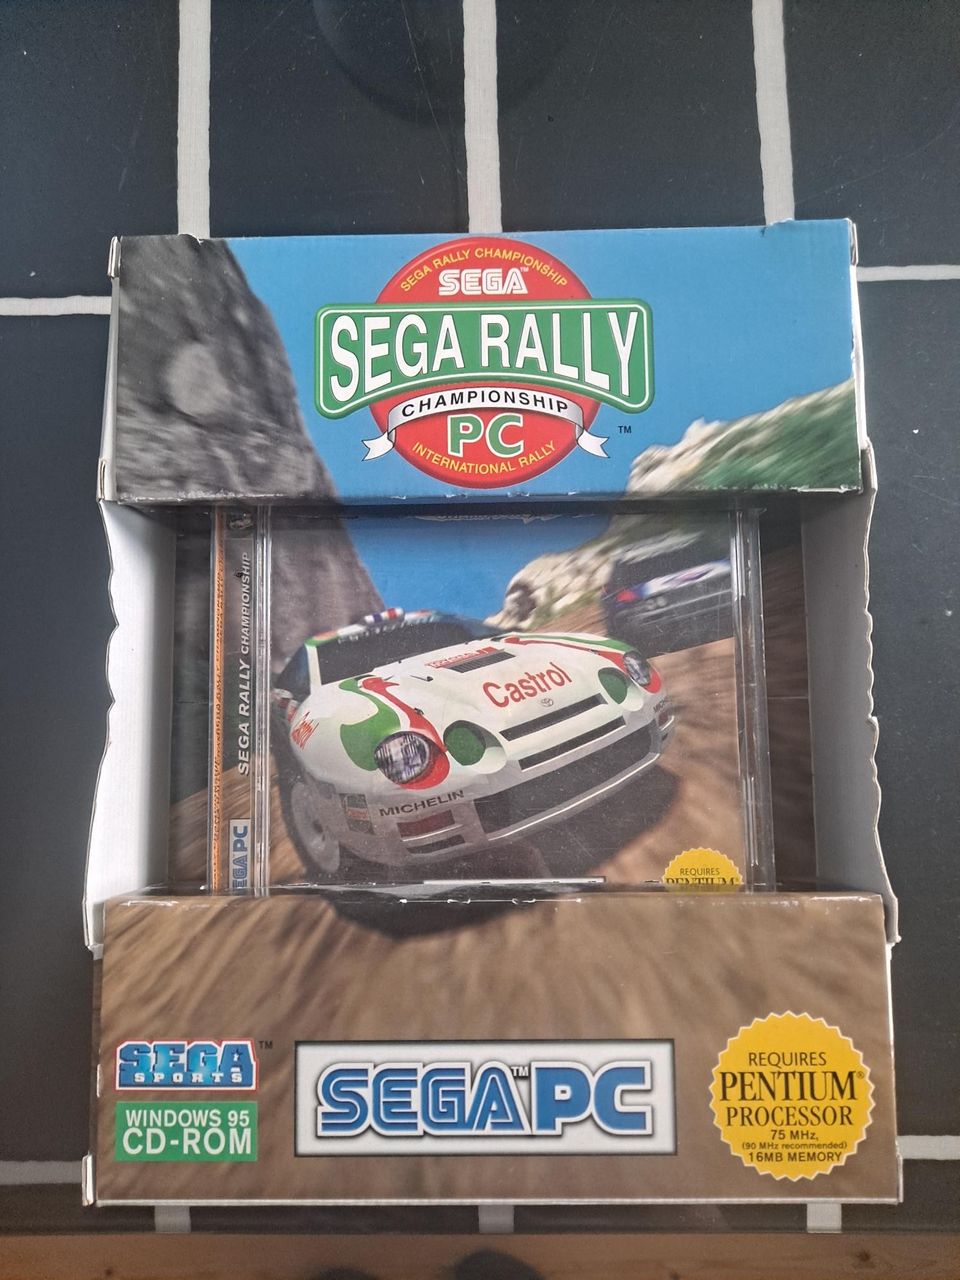 Sega rally championship PC "BigBox"